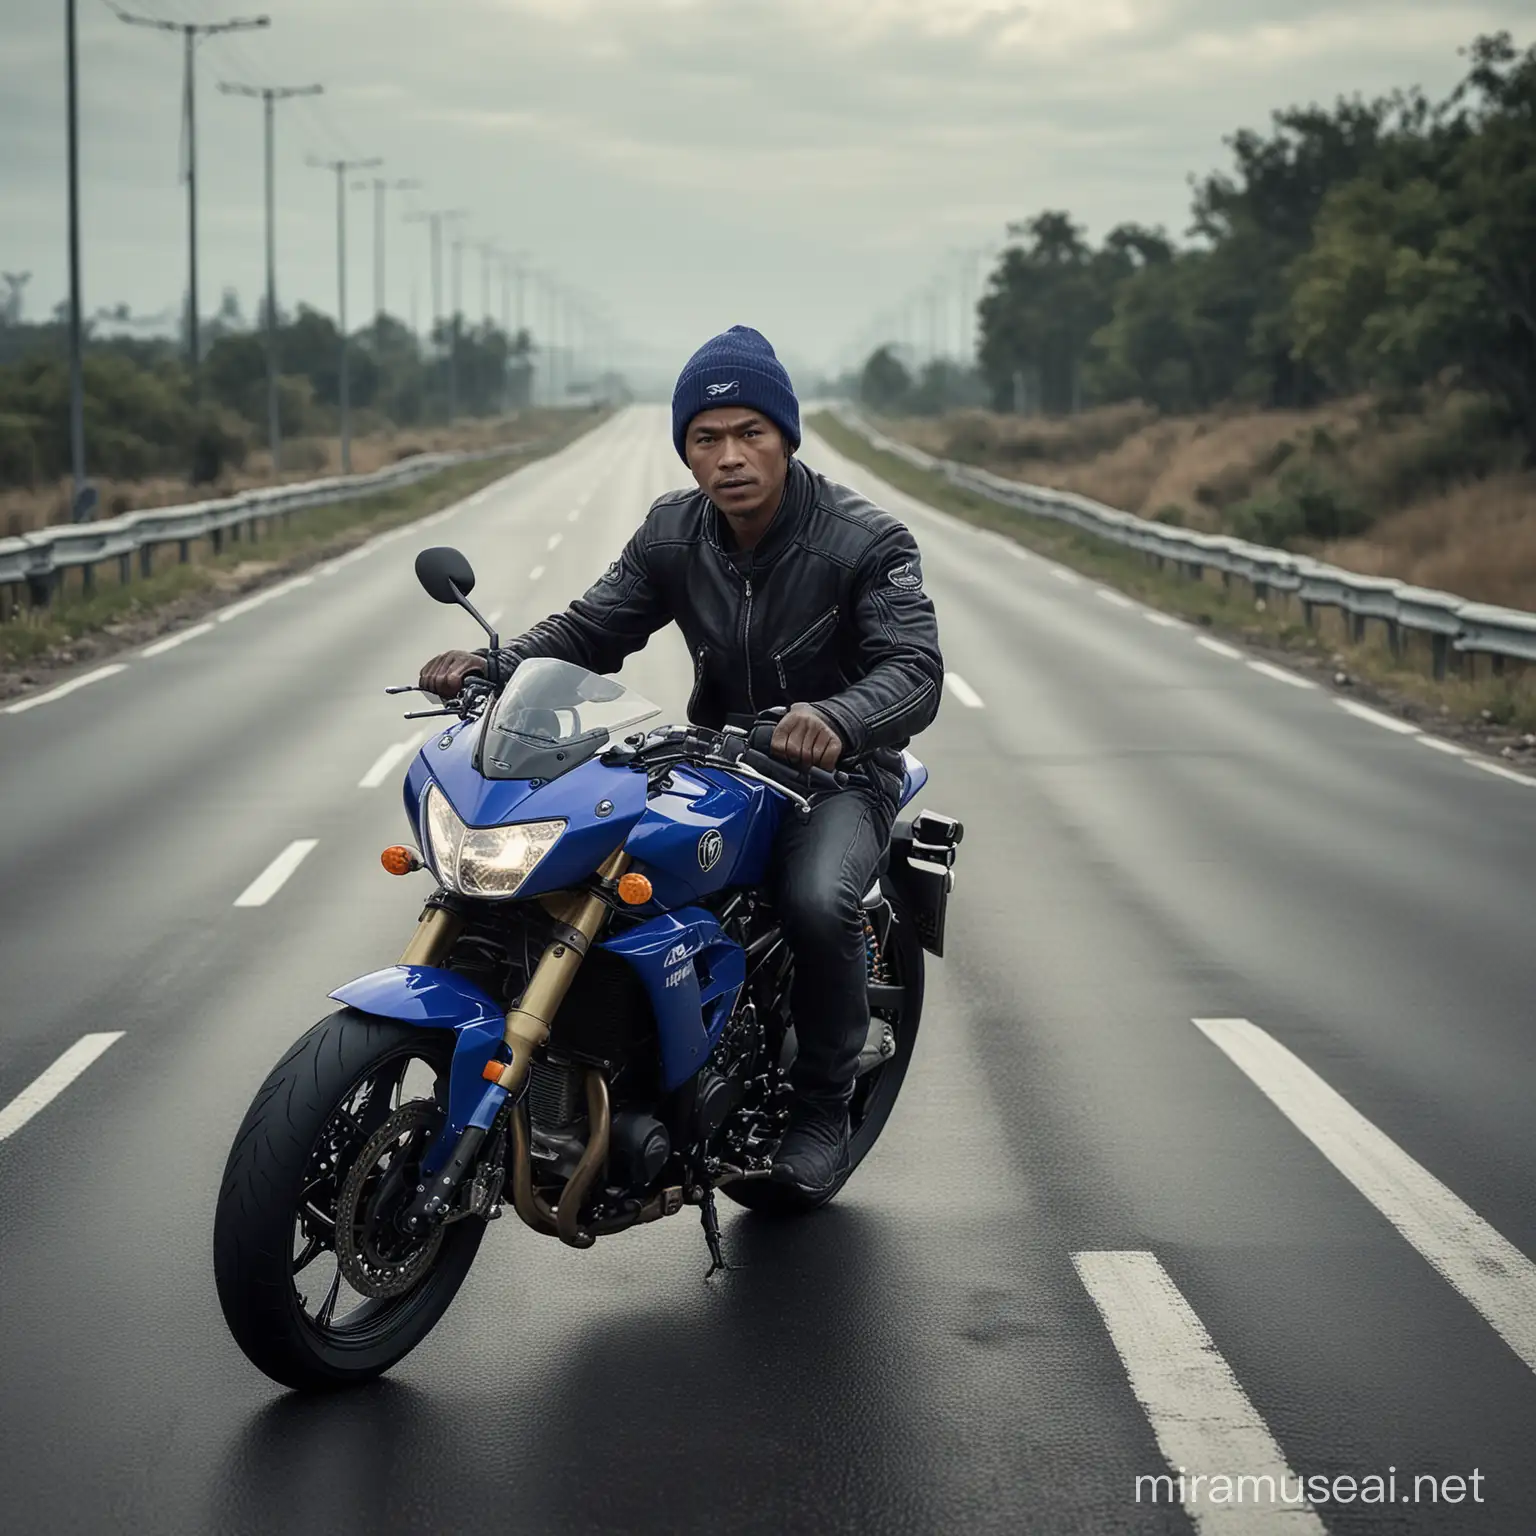 Seorang pria Indonesia umur 40 tahun memakai Beanie dan berjaket sedang duduk santai di jalan raya kosong disampingnya ada motor MotoGP Yamaha biru dgn posisi membelakangi.latar belakang jln raya kosong.gambar 4D, sangat HD, detail, realistis, hasil karya photography profesional 